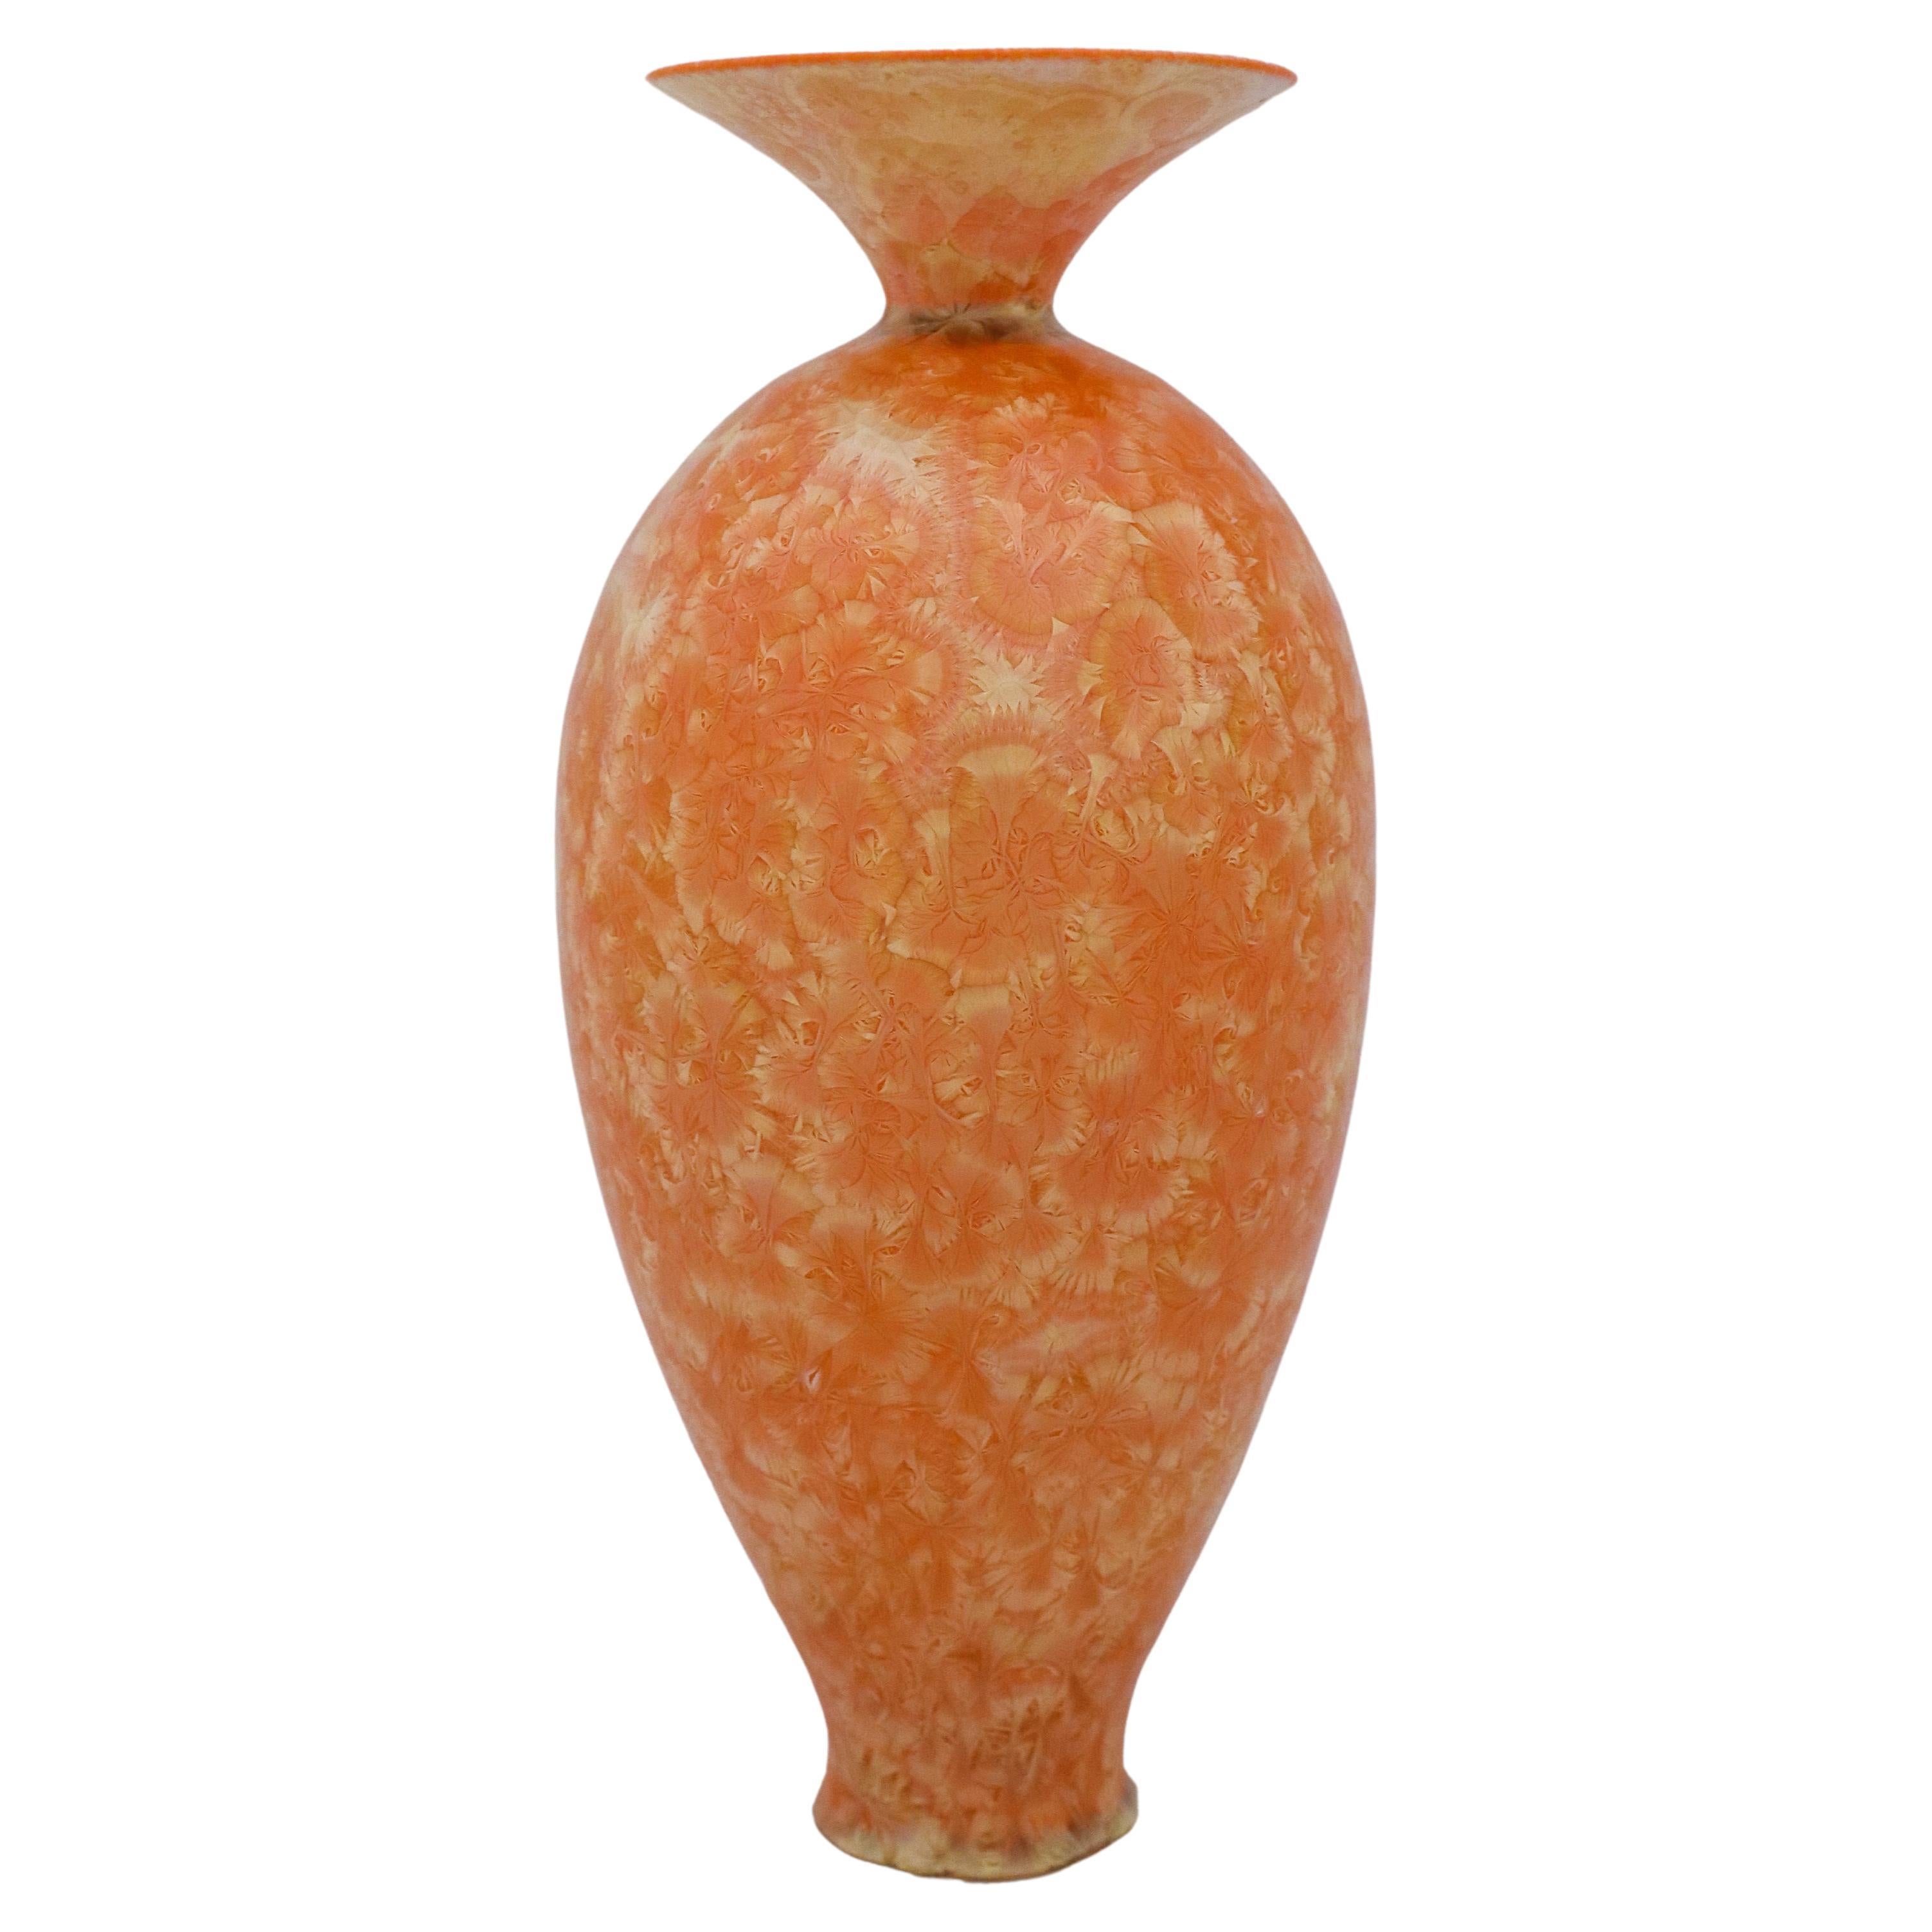 Vase with Apricot Crystalline Glaze Isak Isaksson Contemporary Sweden Ceramic